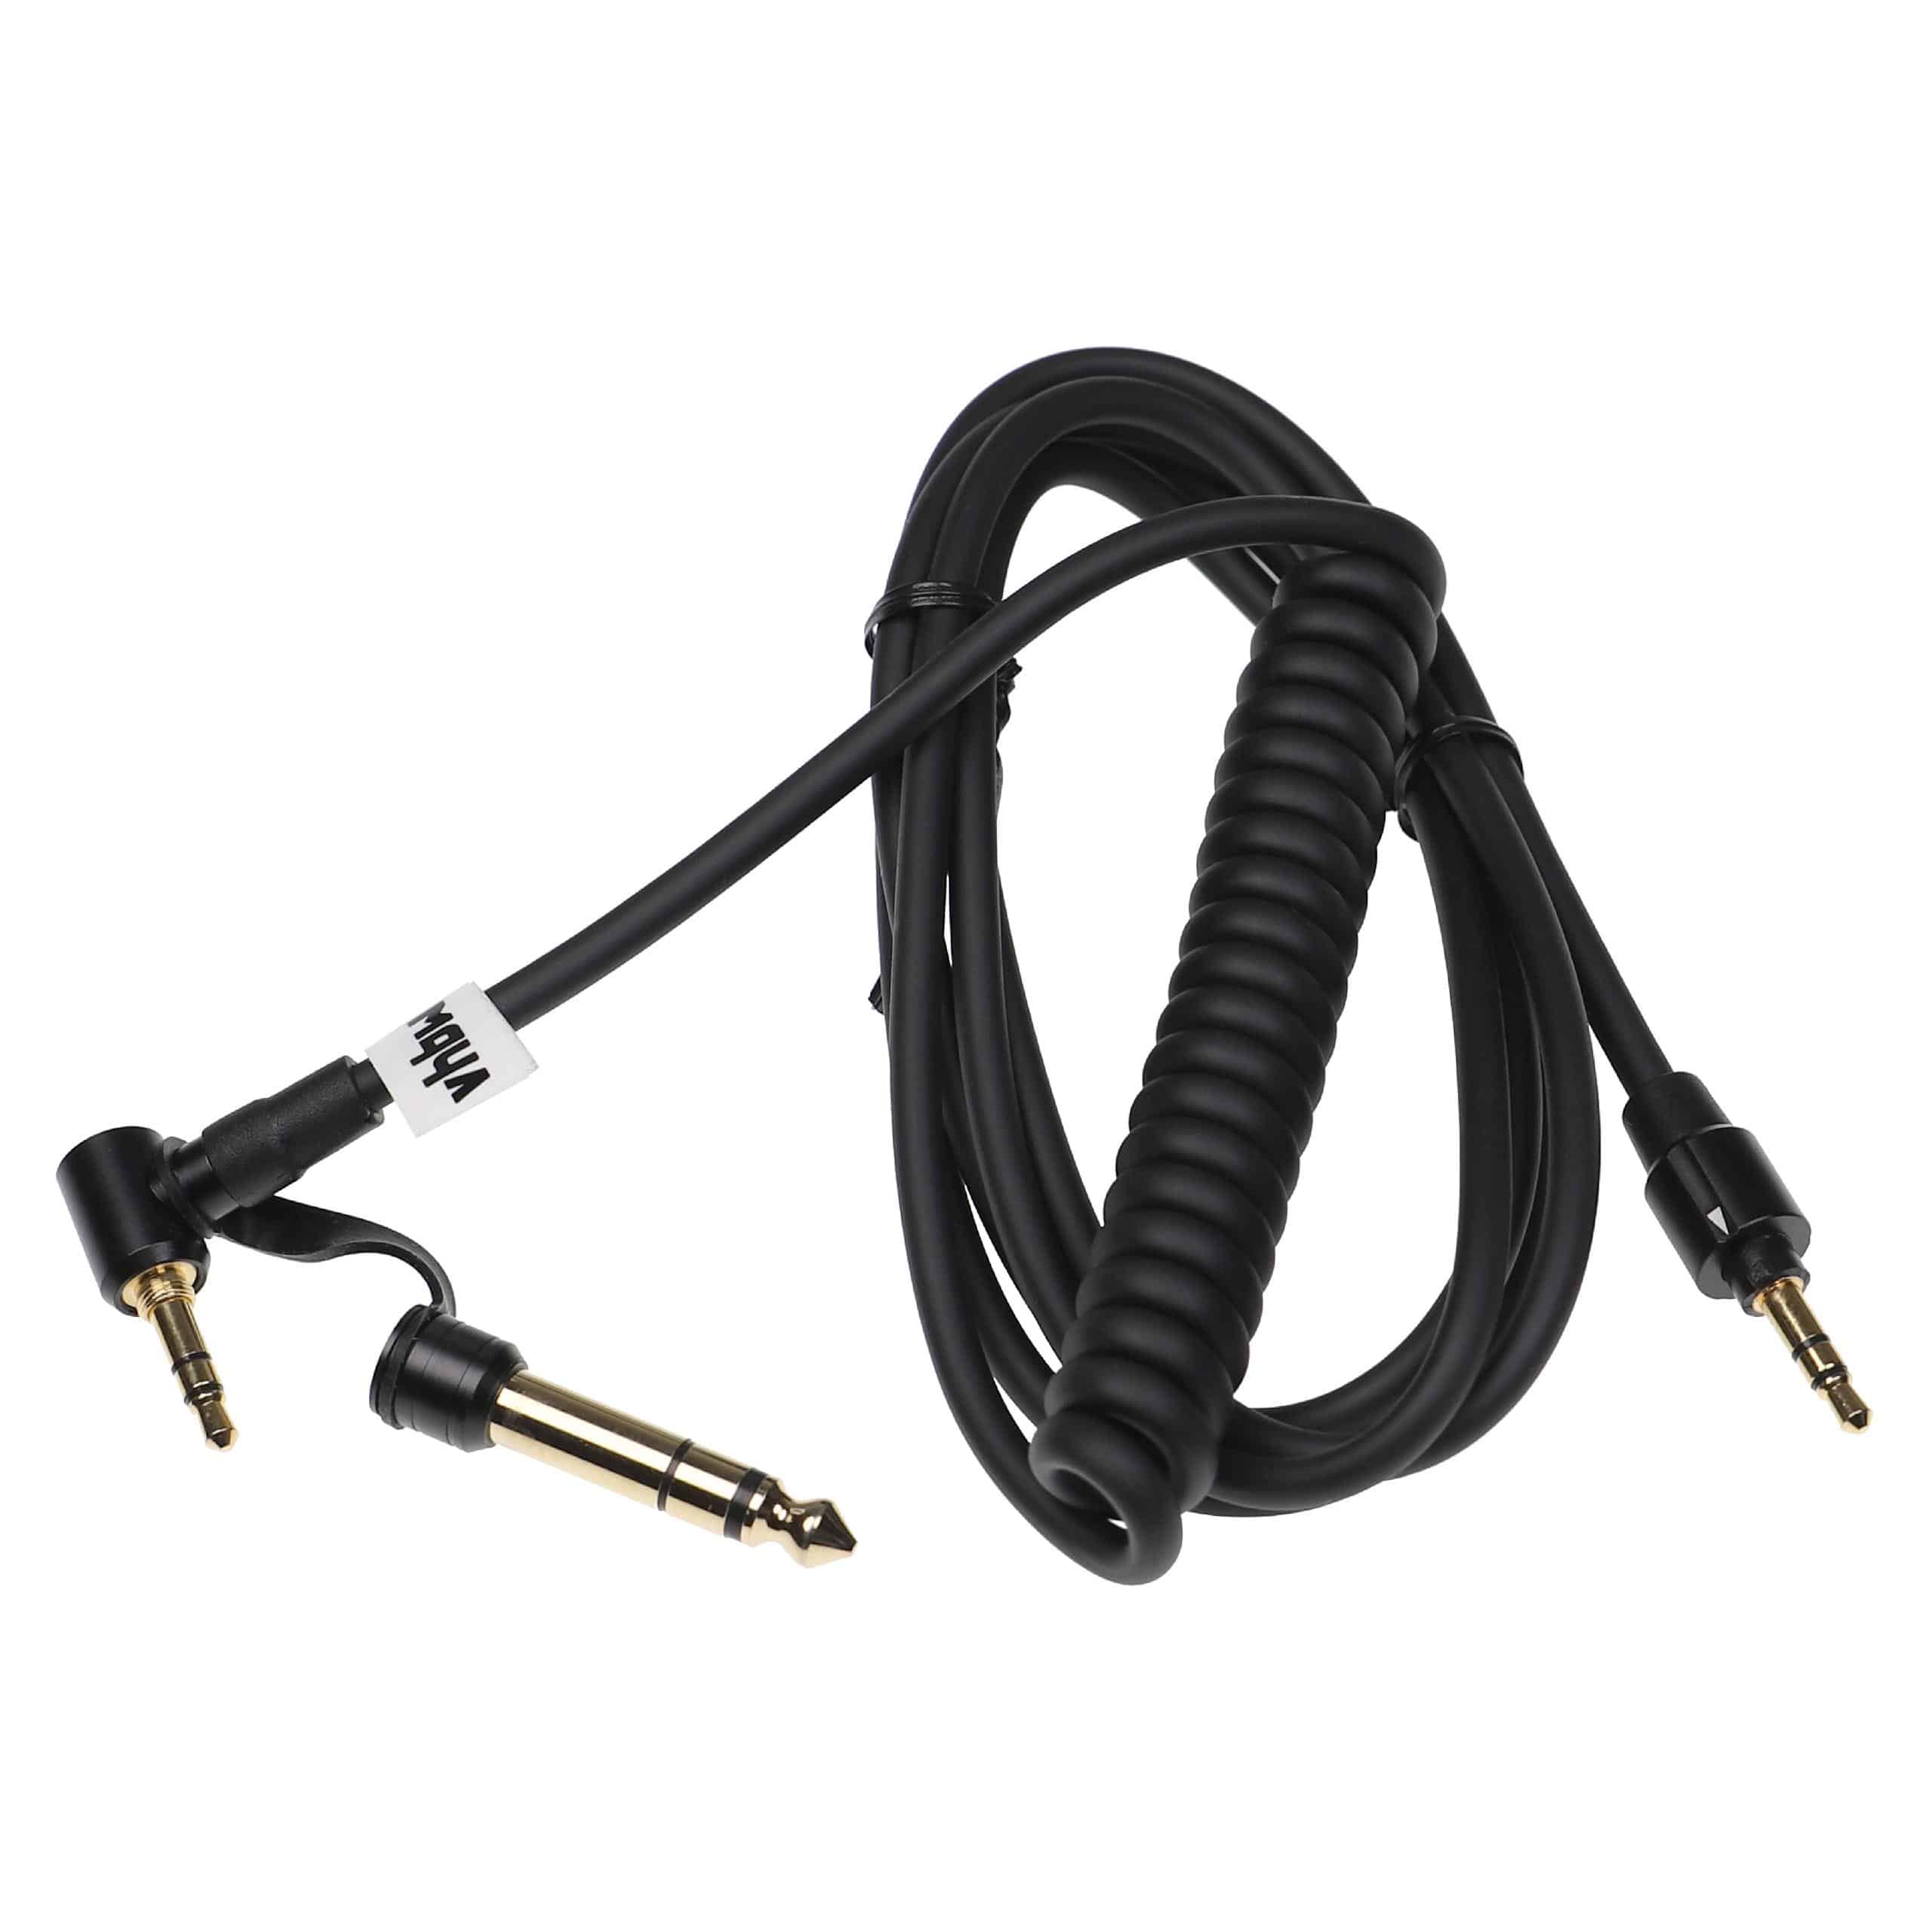 Headphones Cable suitable for Monster Beats by Dr. Dre Beats EP etc., 150 cm